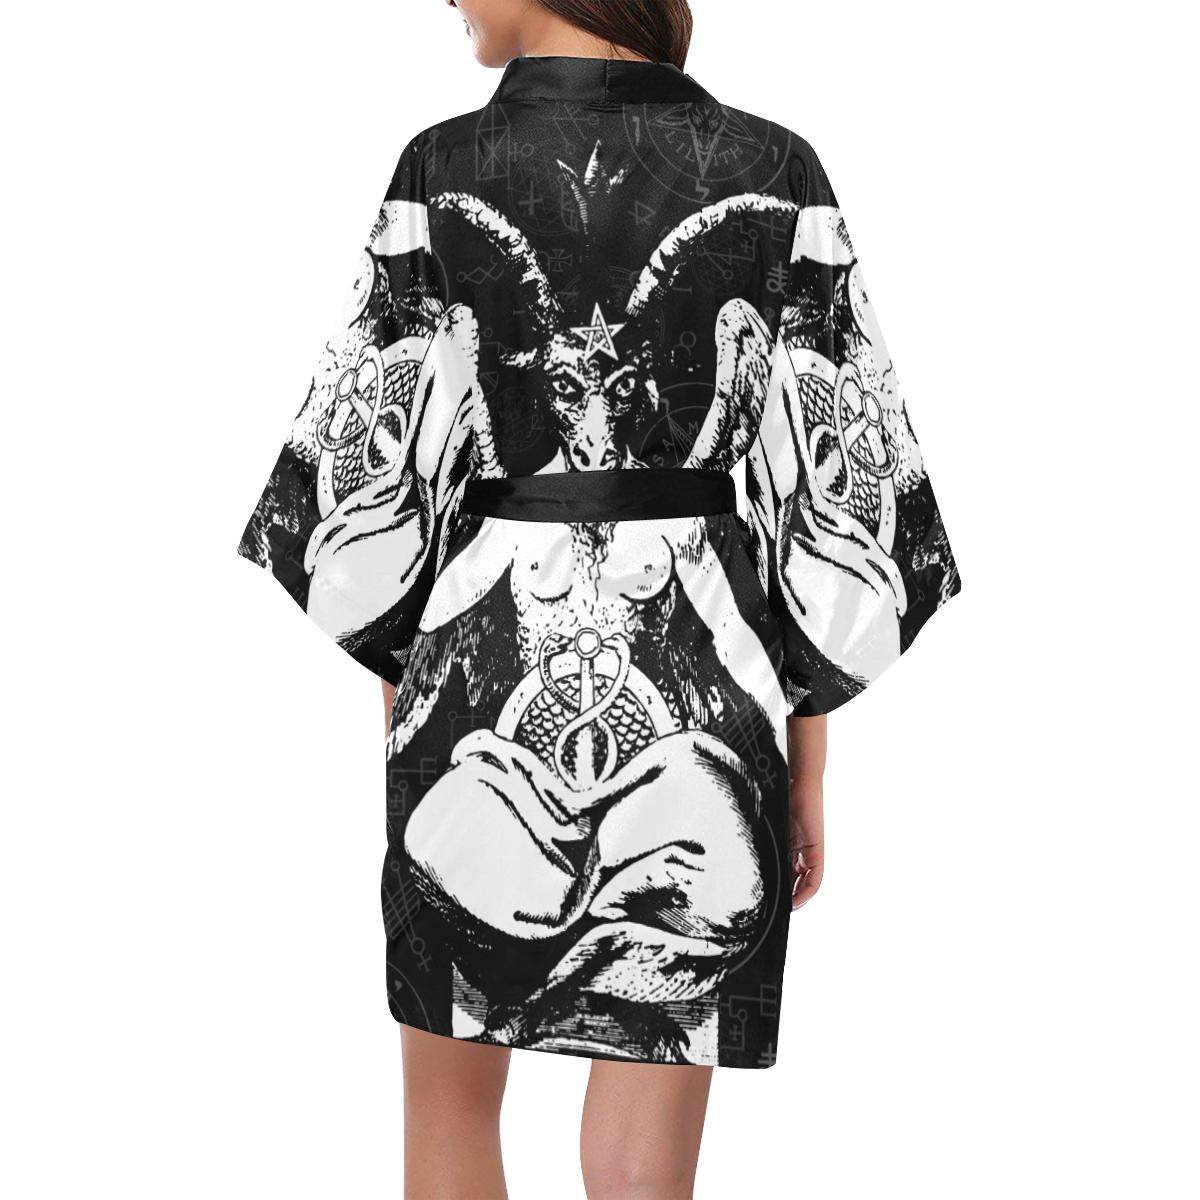 The Baphomet Women's Short Kimono Robe